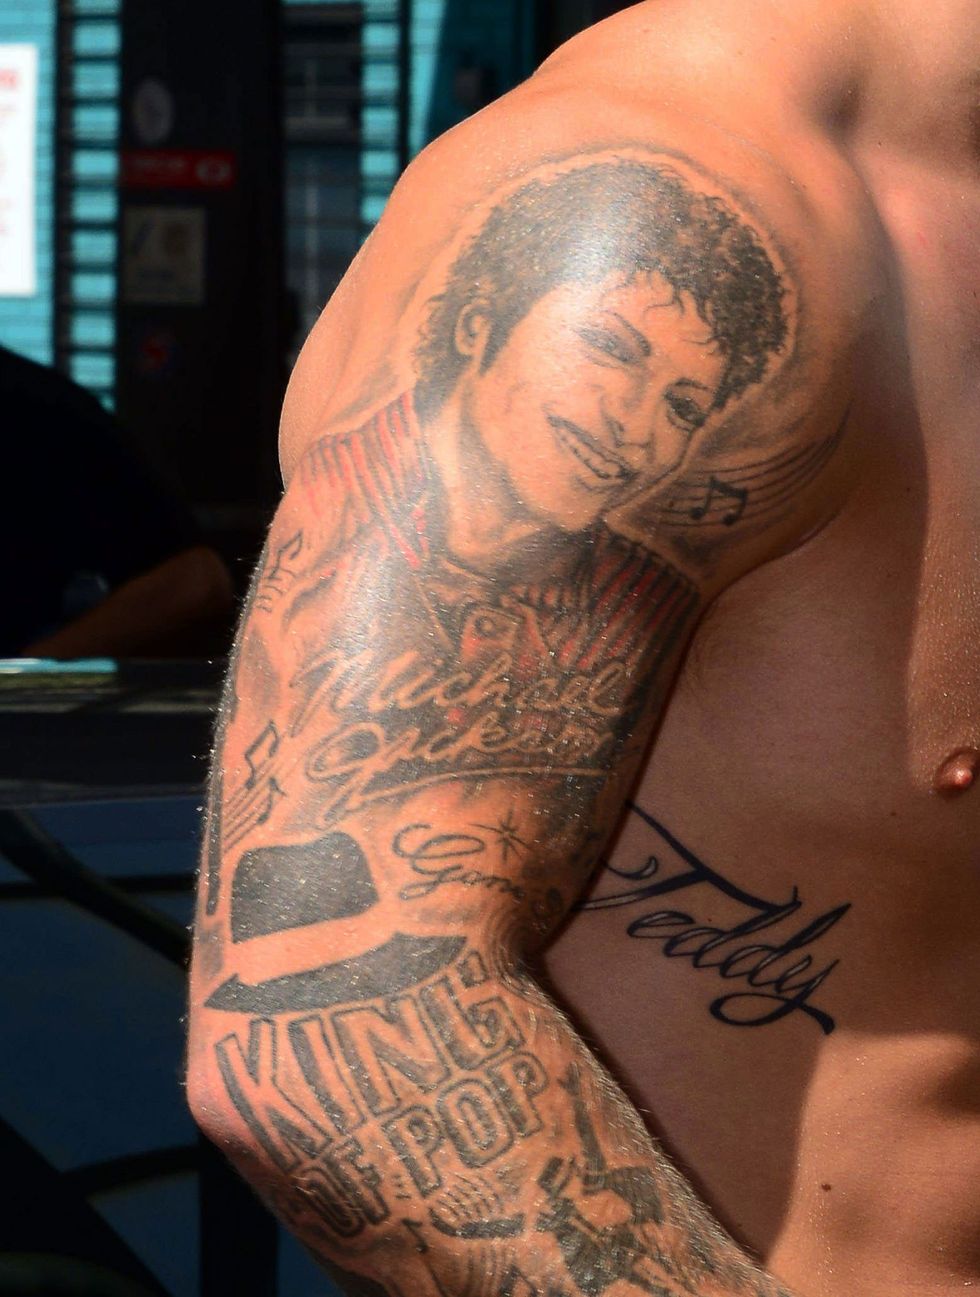 Dan Osborne, Michael Jackson portrait tattoo